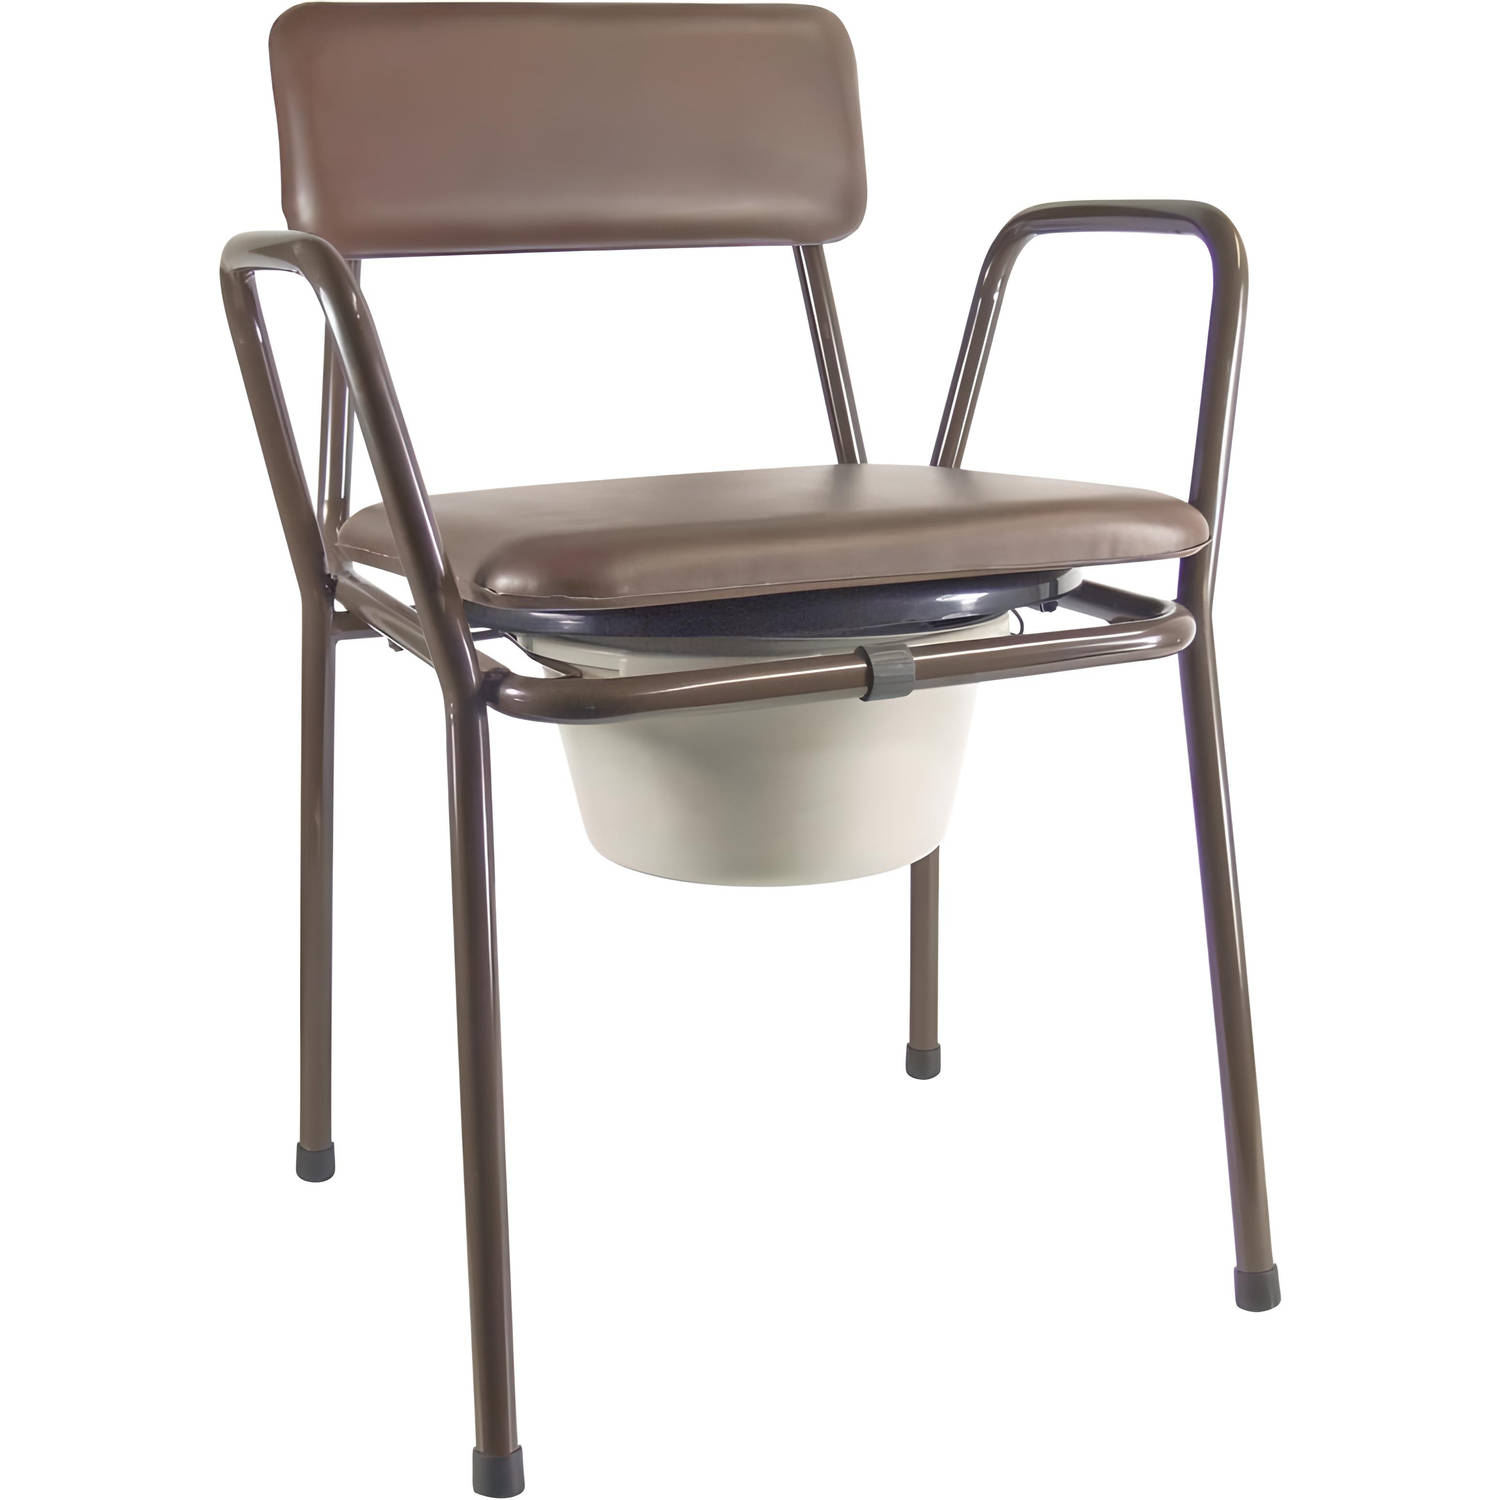 - Toiletstoel-po-stoel met extra anti-kras coating!